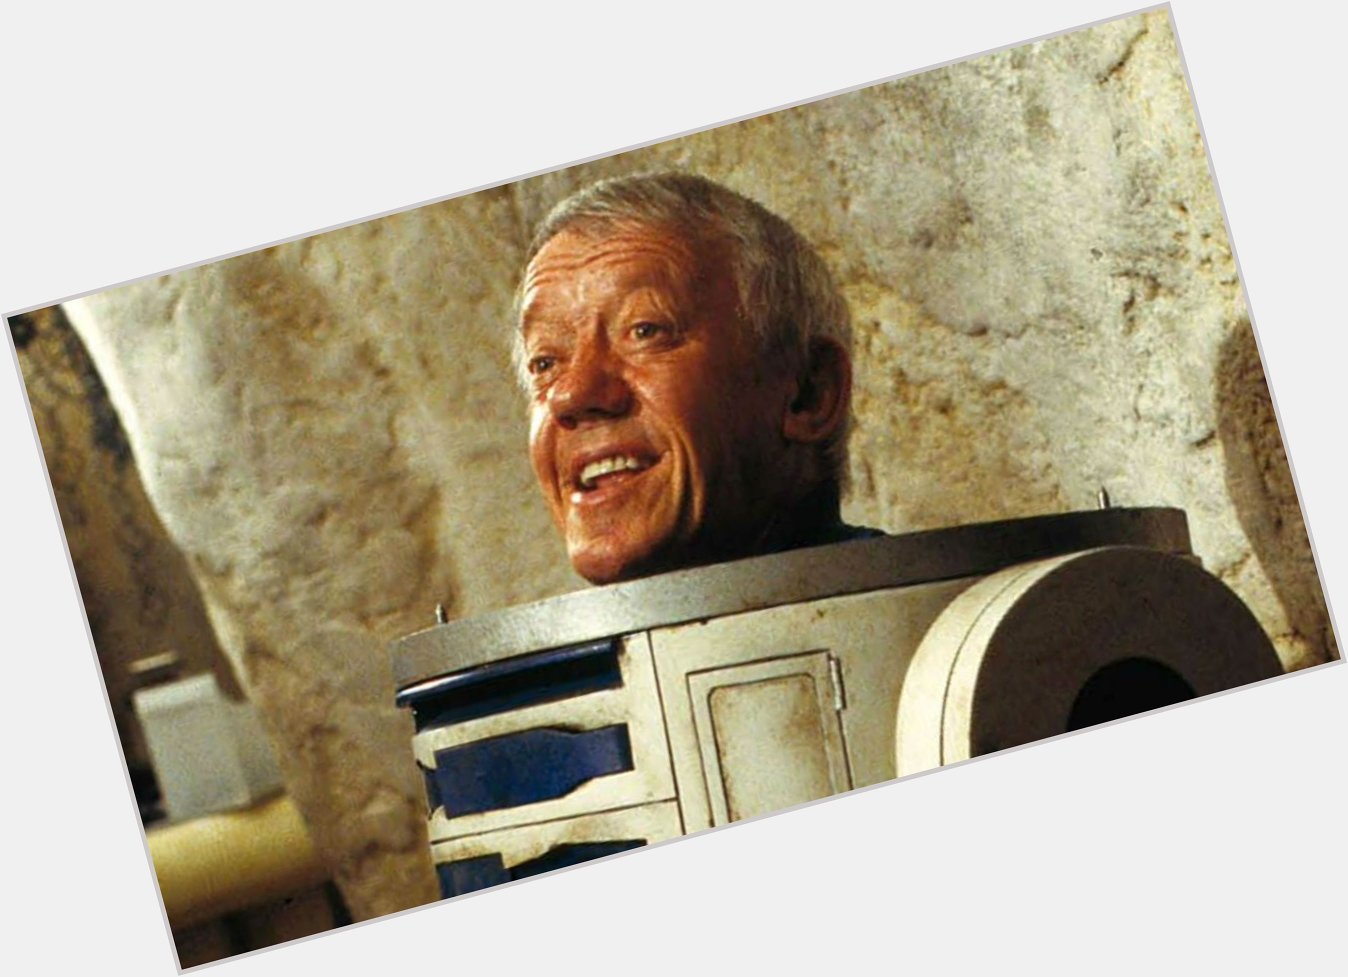 Happy Birthday to Kenny Baker, R2-D2 in STAR WARS! 